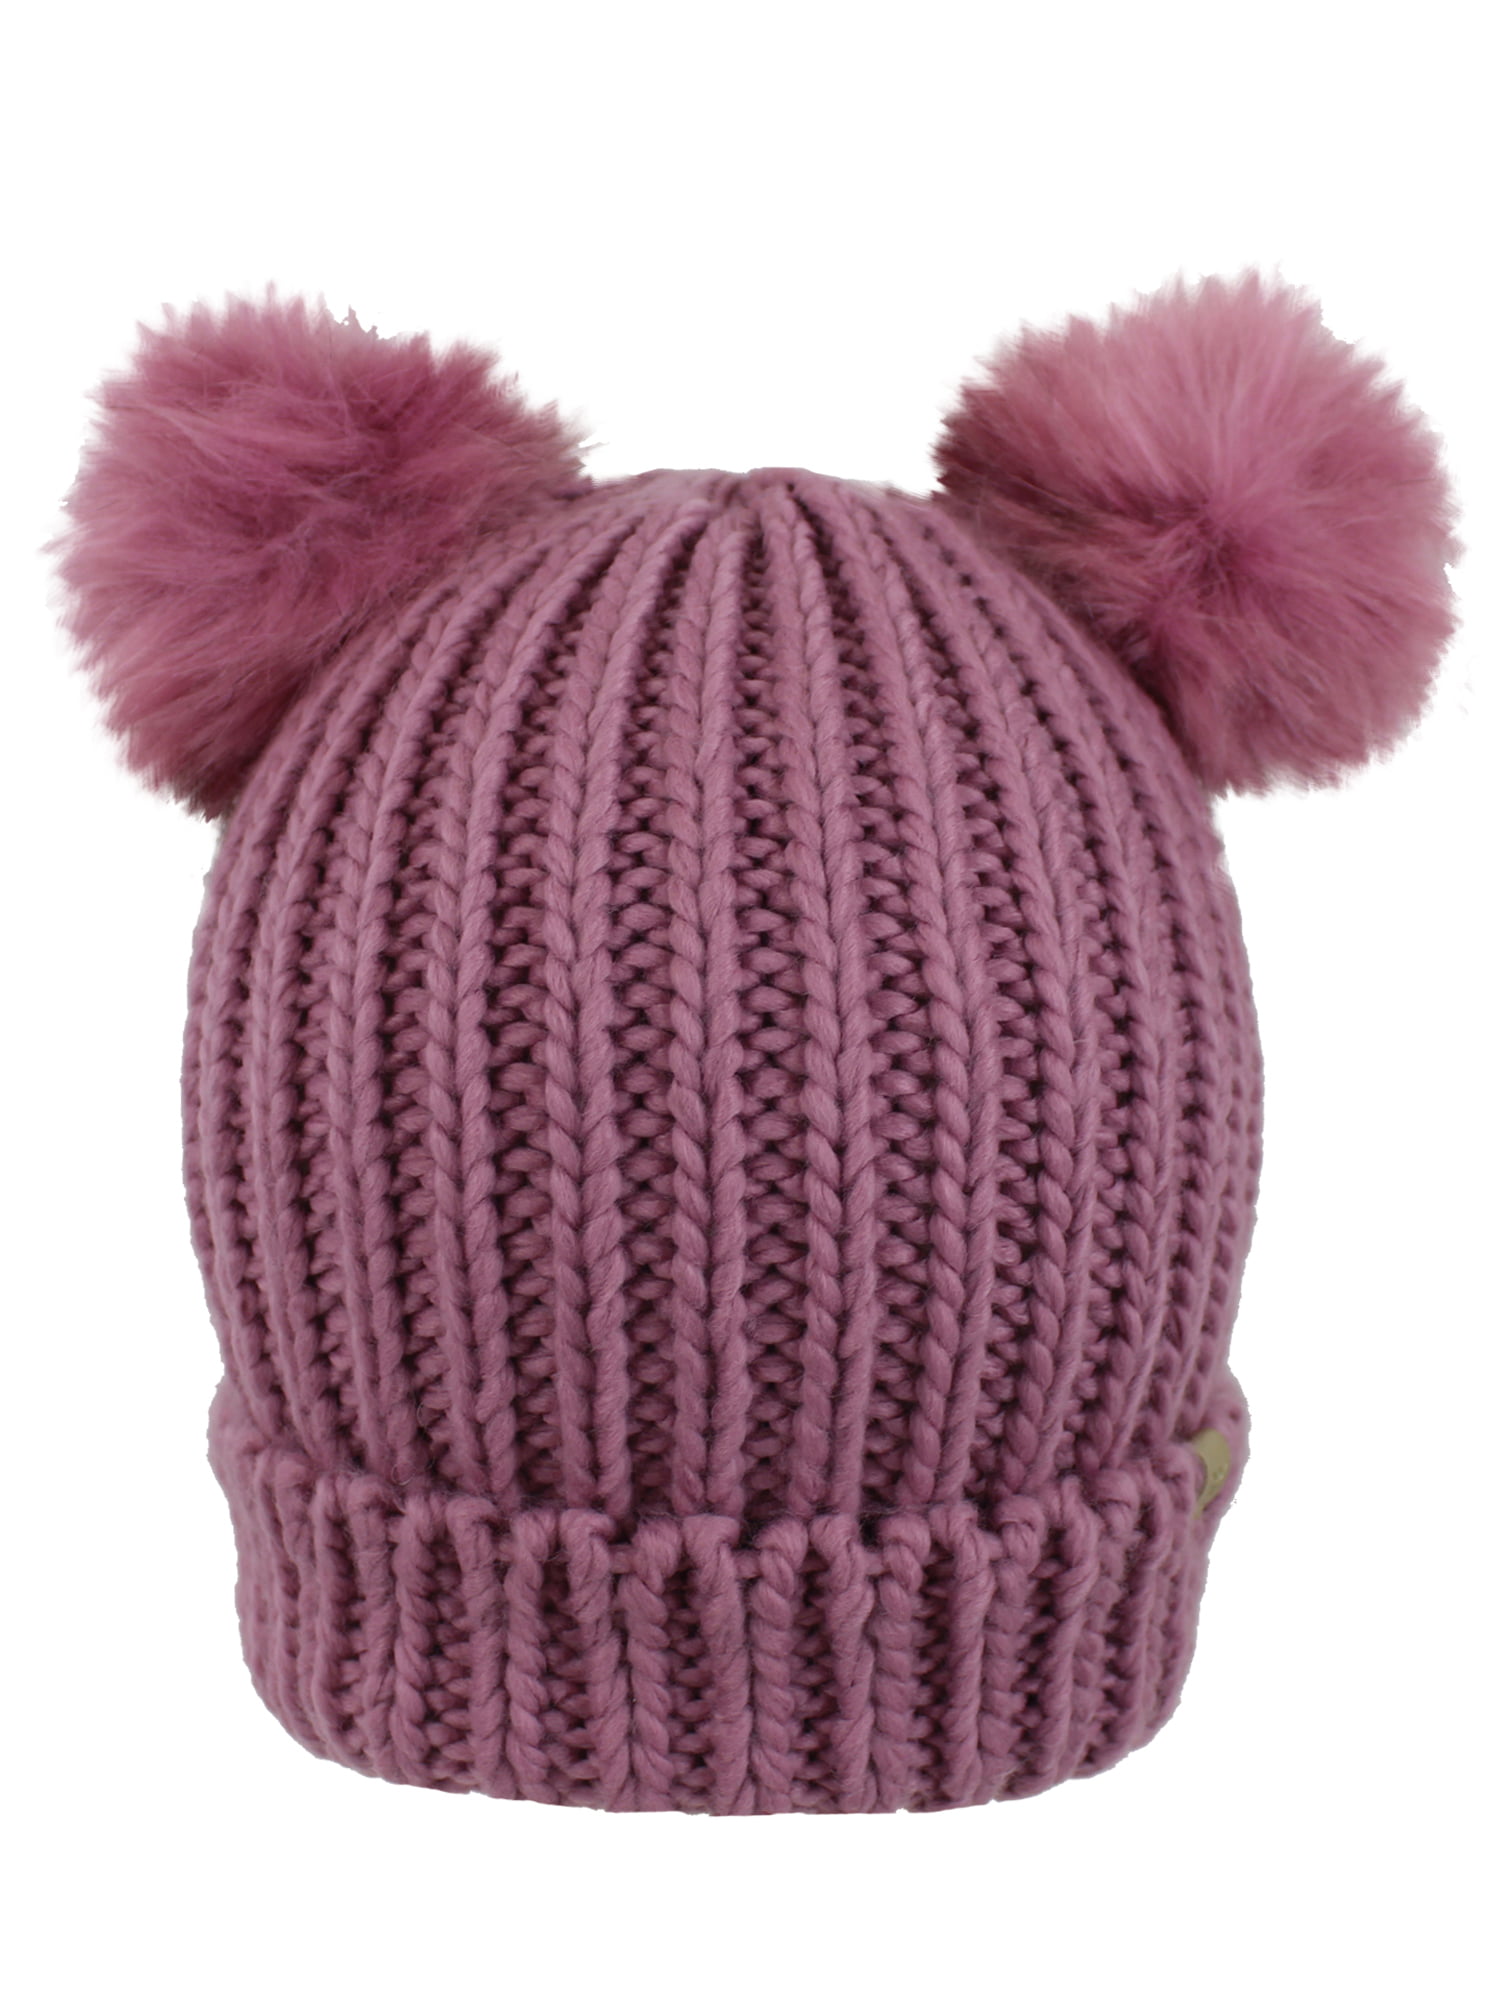 Dusty Pink Knit Beanie Cap Hat With Pigtail Pom Poms - Walmart.com